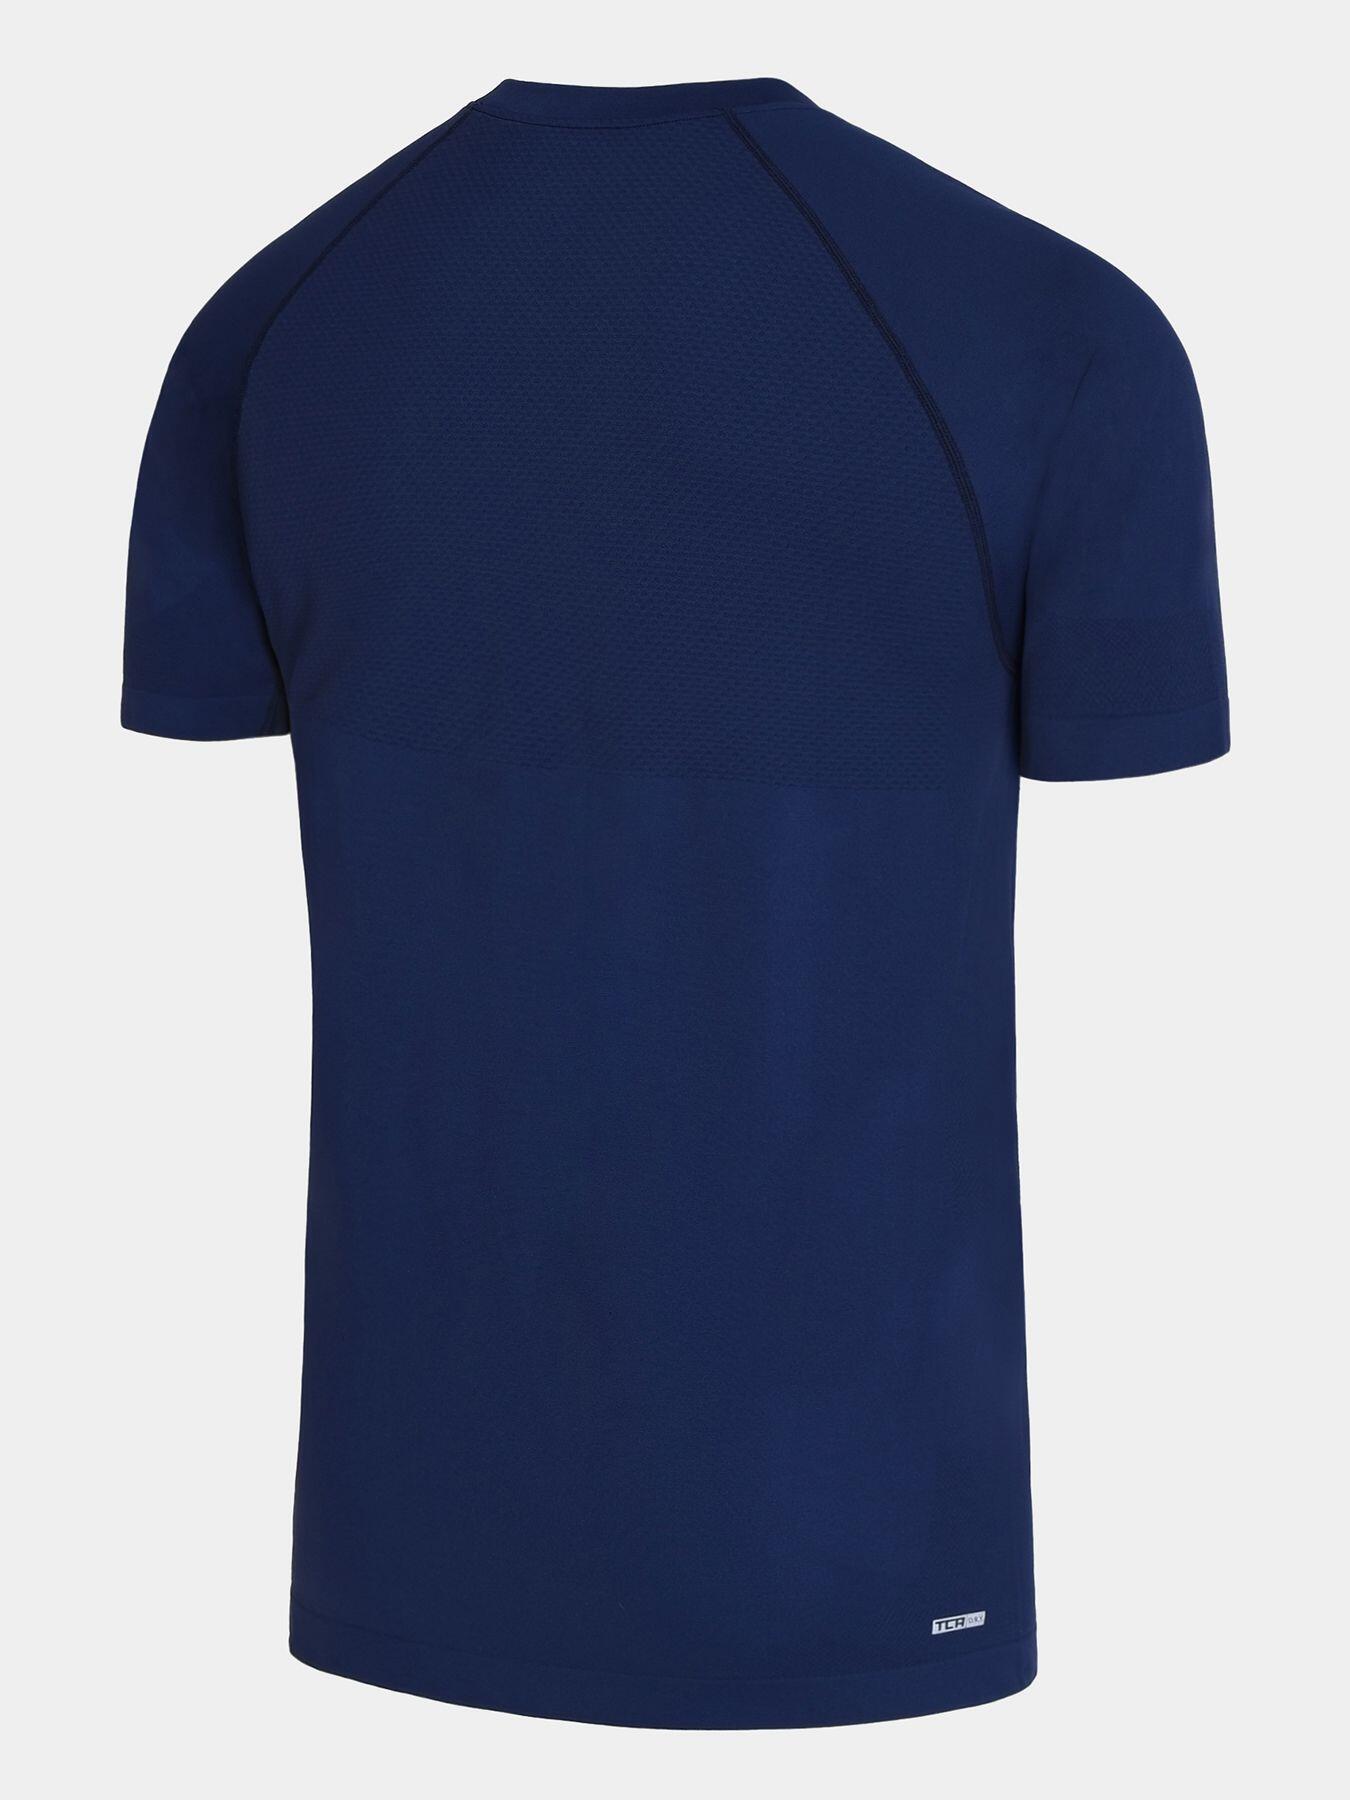 Men's Superknit Breathable Running Gym T-Shirt - Blueprint 2/5